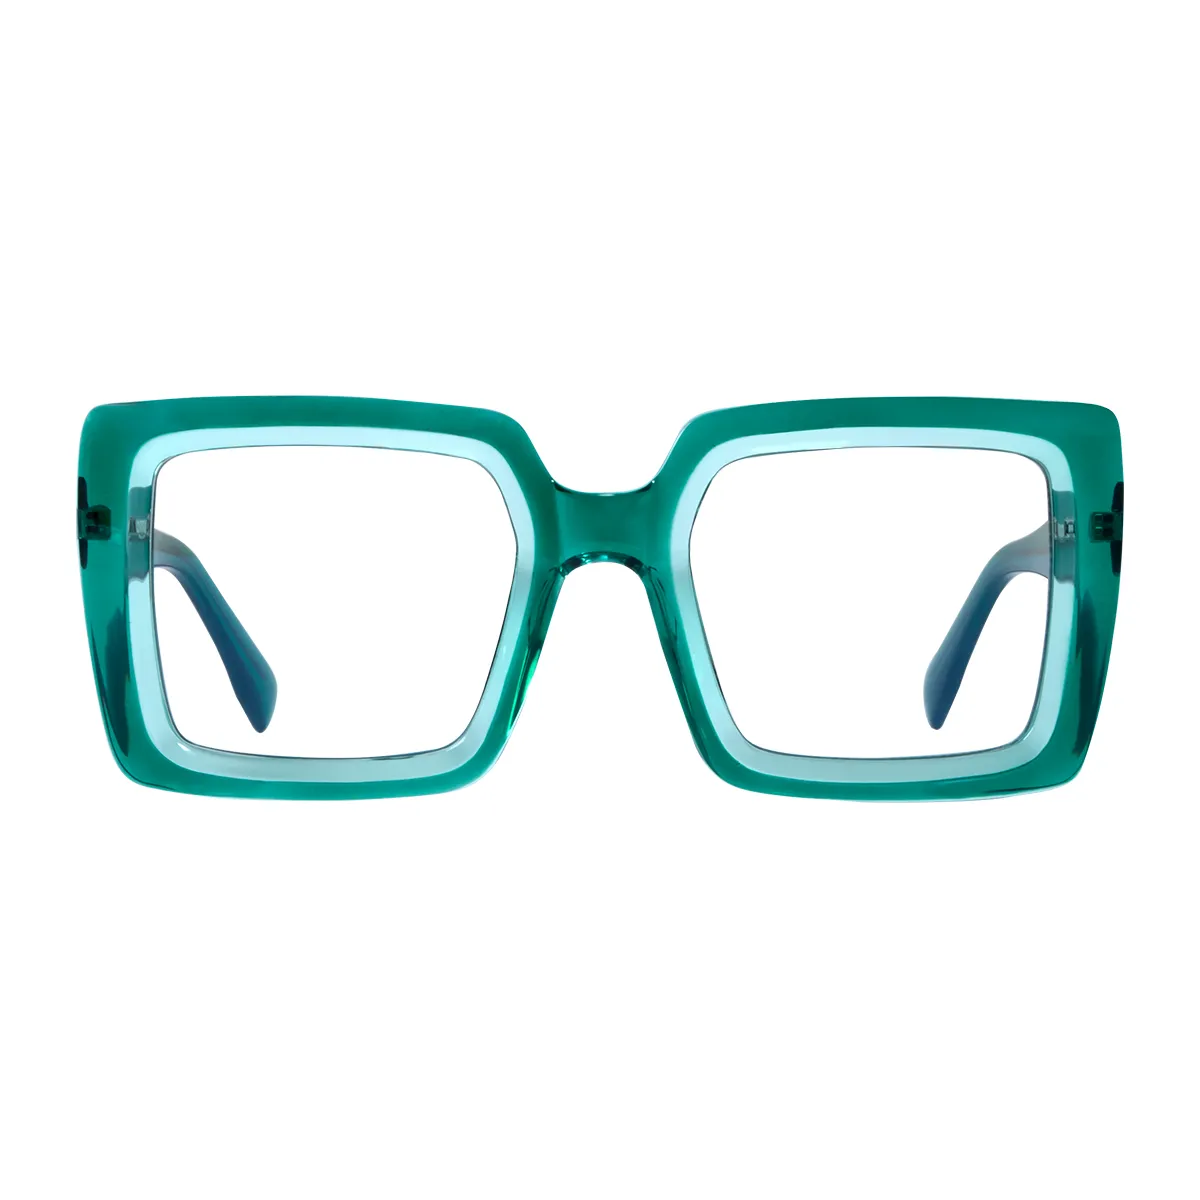 Ursula - glasses Translucent-green Glasses for Women